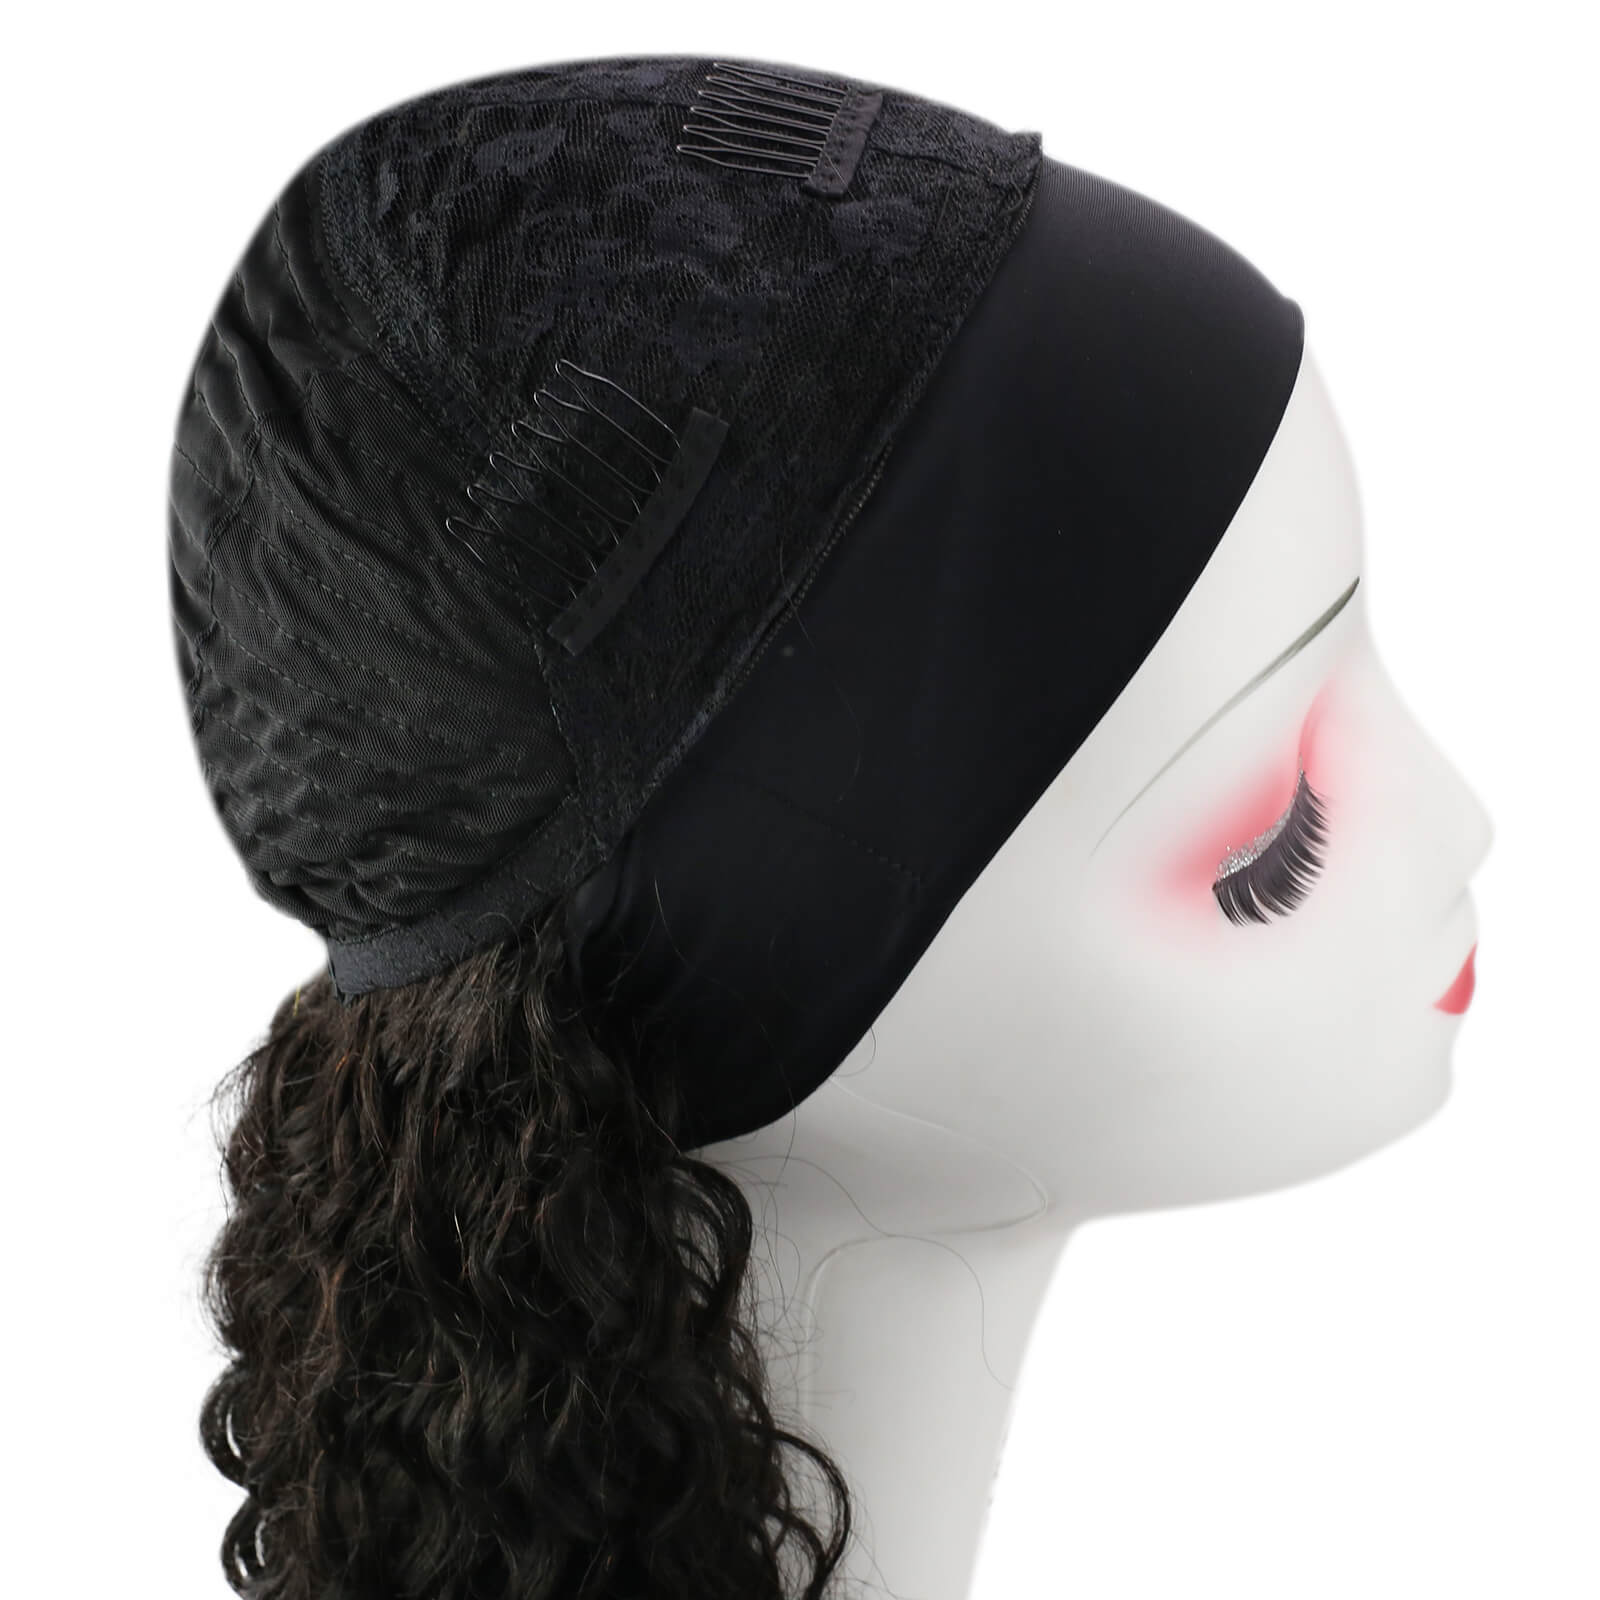 [Clearance!]Fshine Kinky Curly Headband Wigs for Women #1B